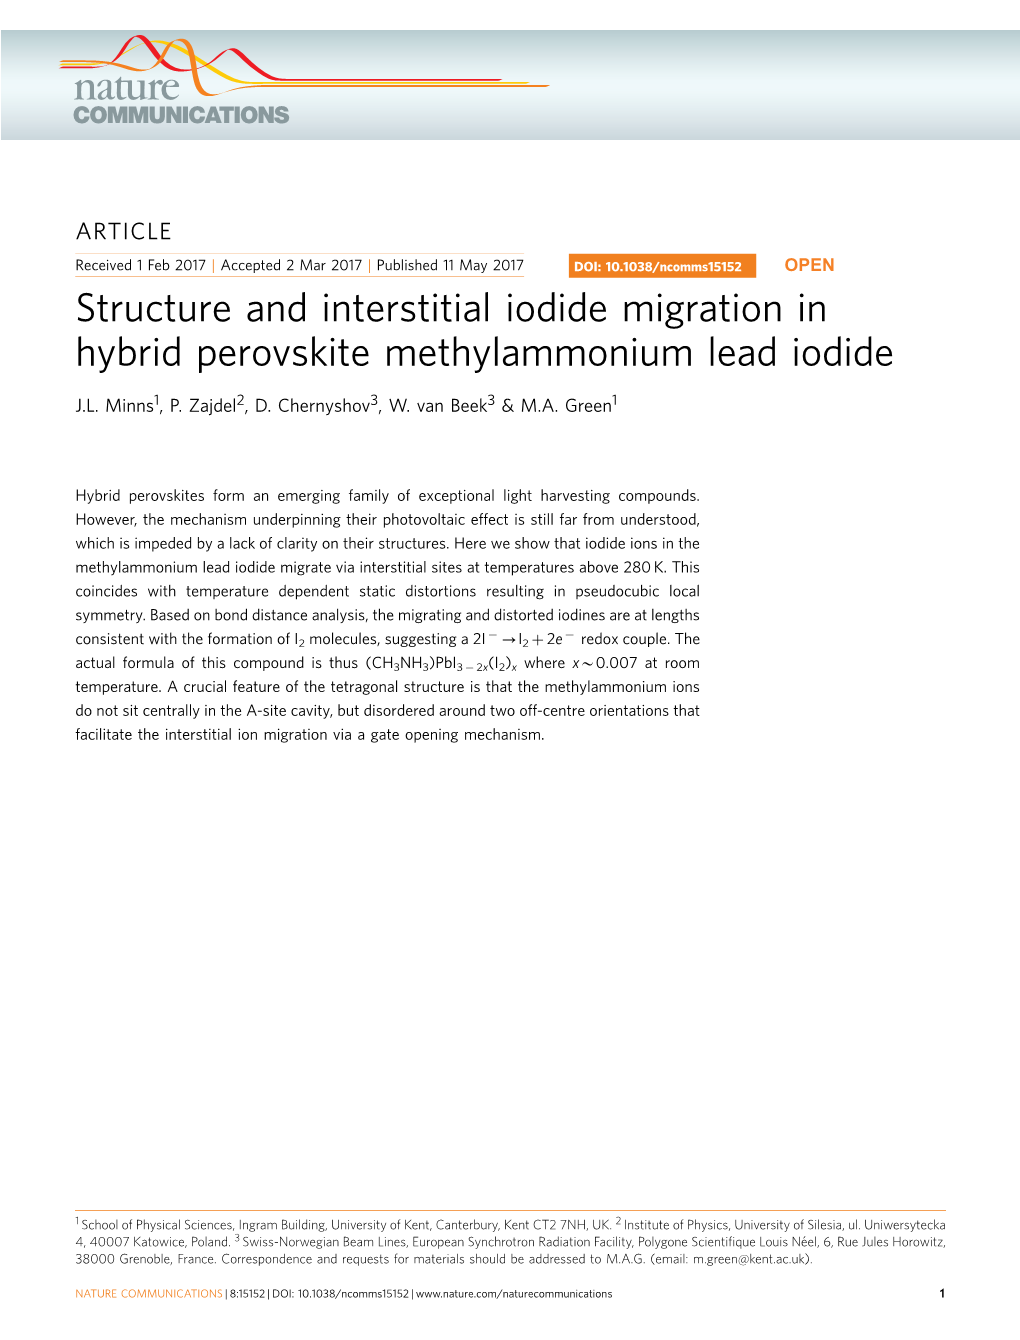 Structure and Interstitial Iodide Migration in Hybrid Perovskite Methylammonium Lead Iodide